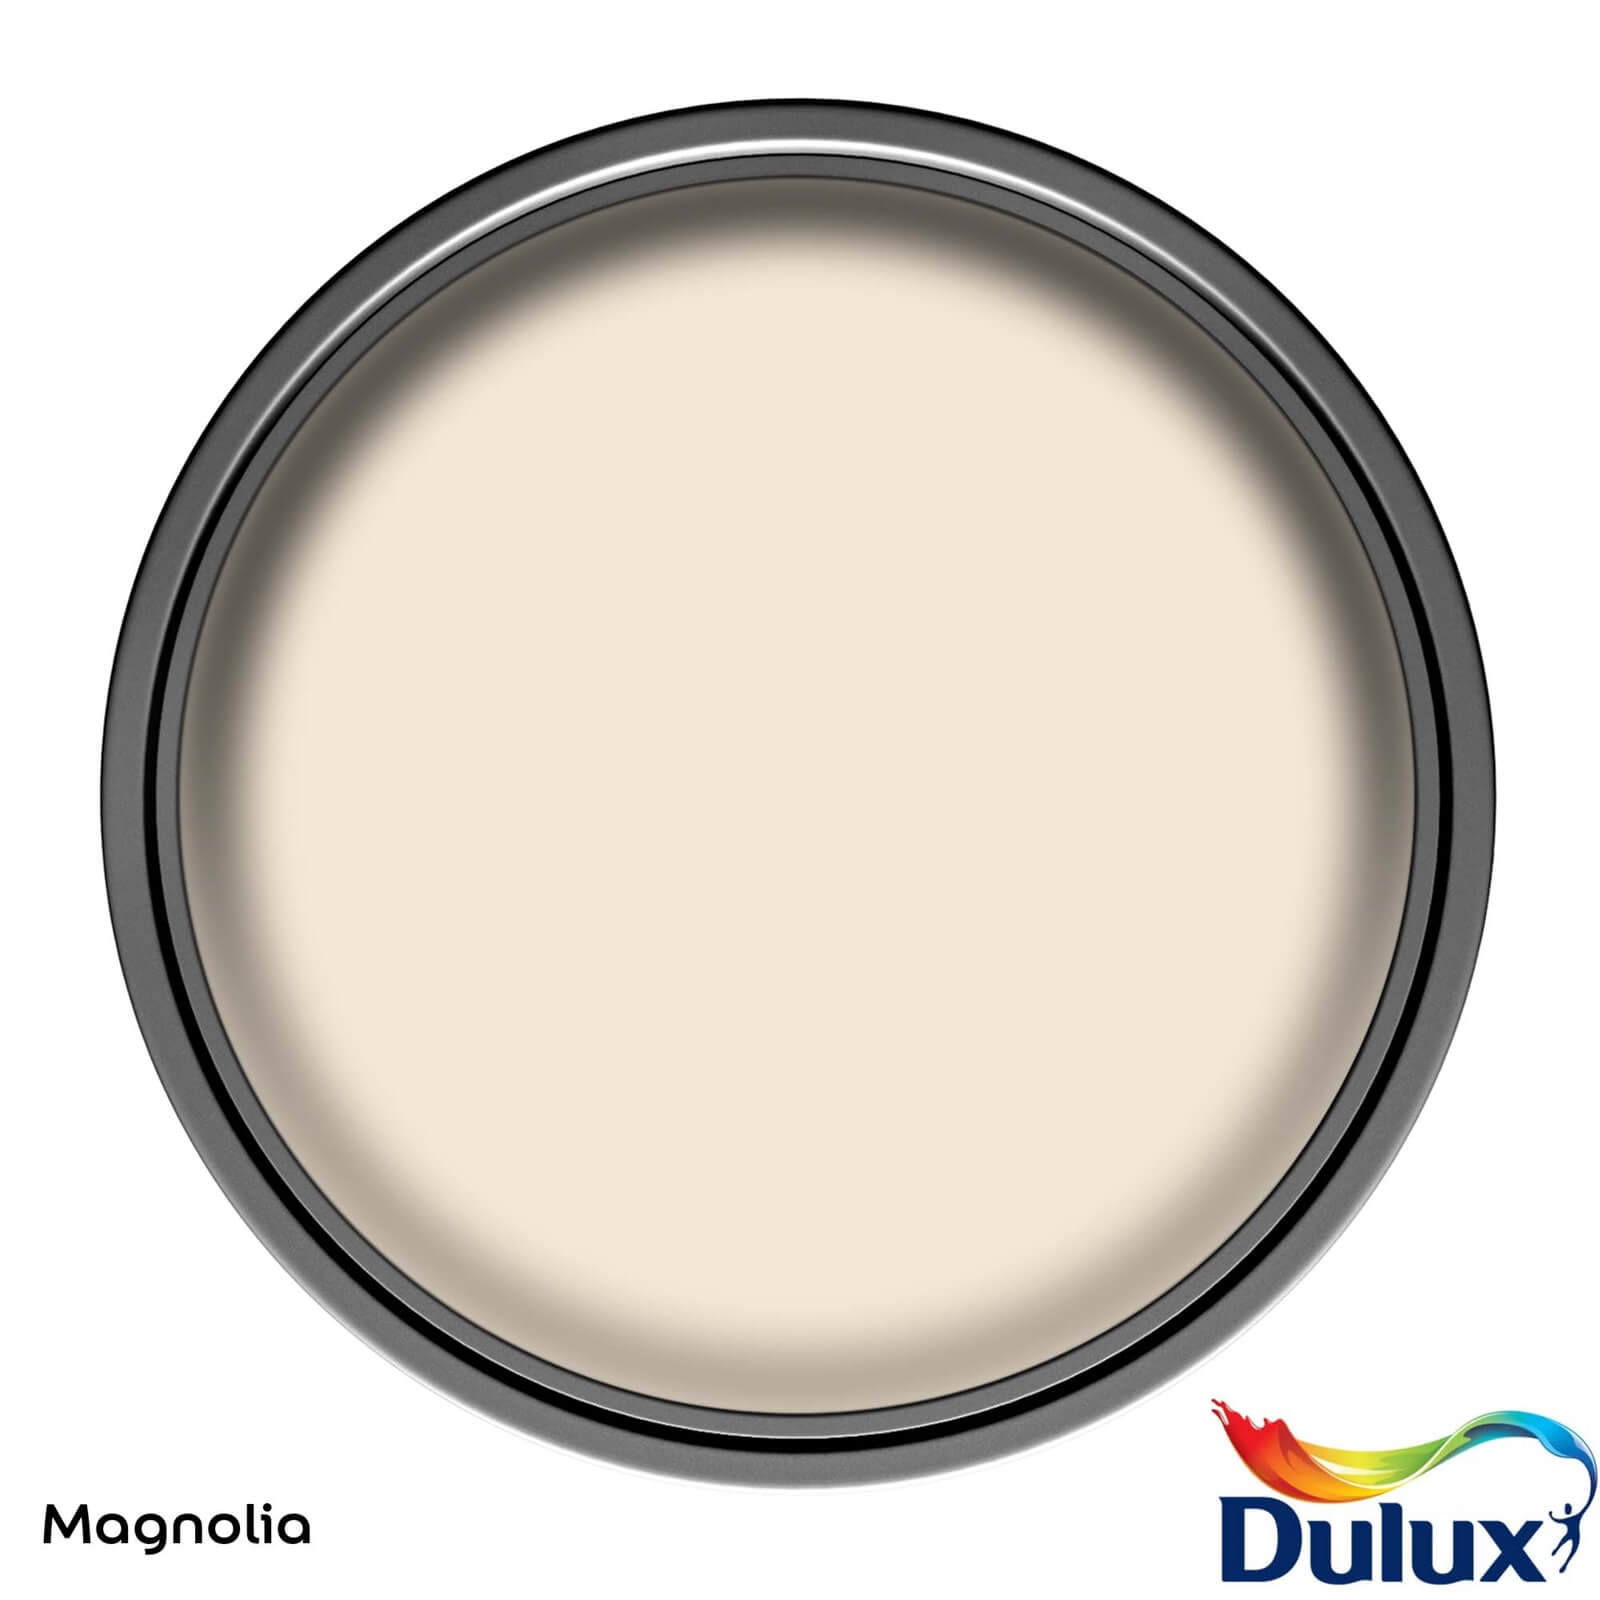 Dulux Once Magnolia - Satinwood Paint - 750ml